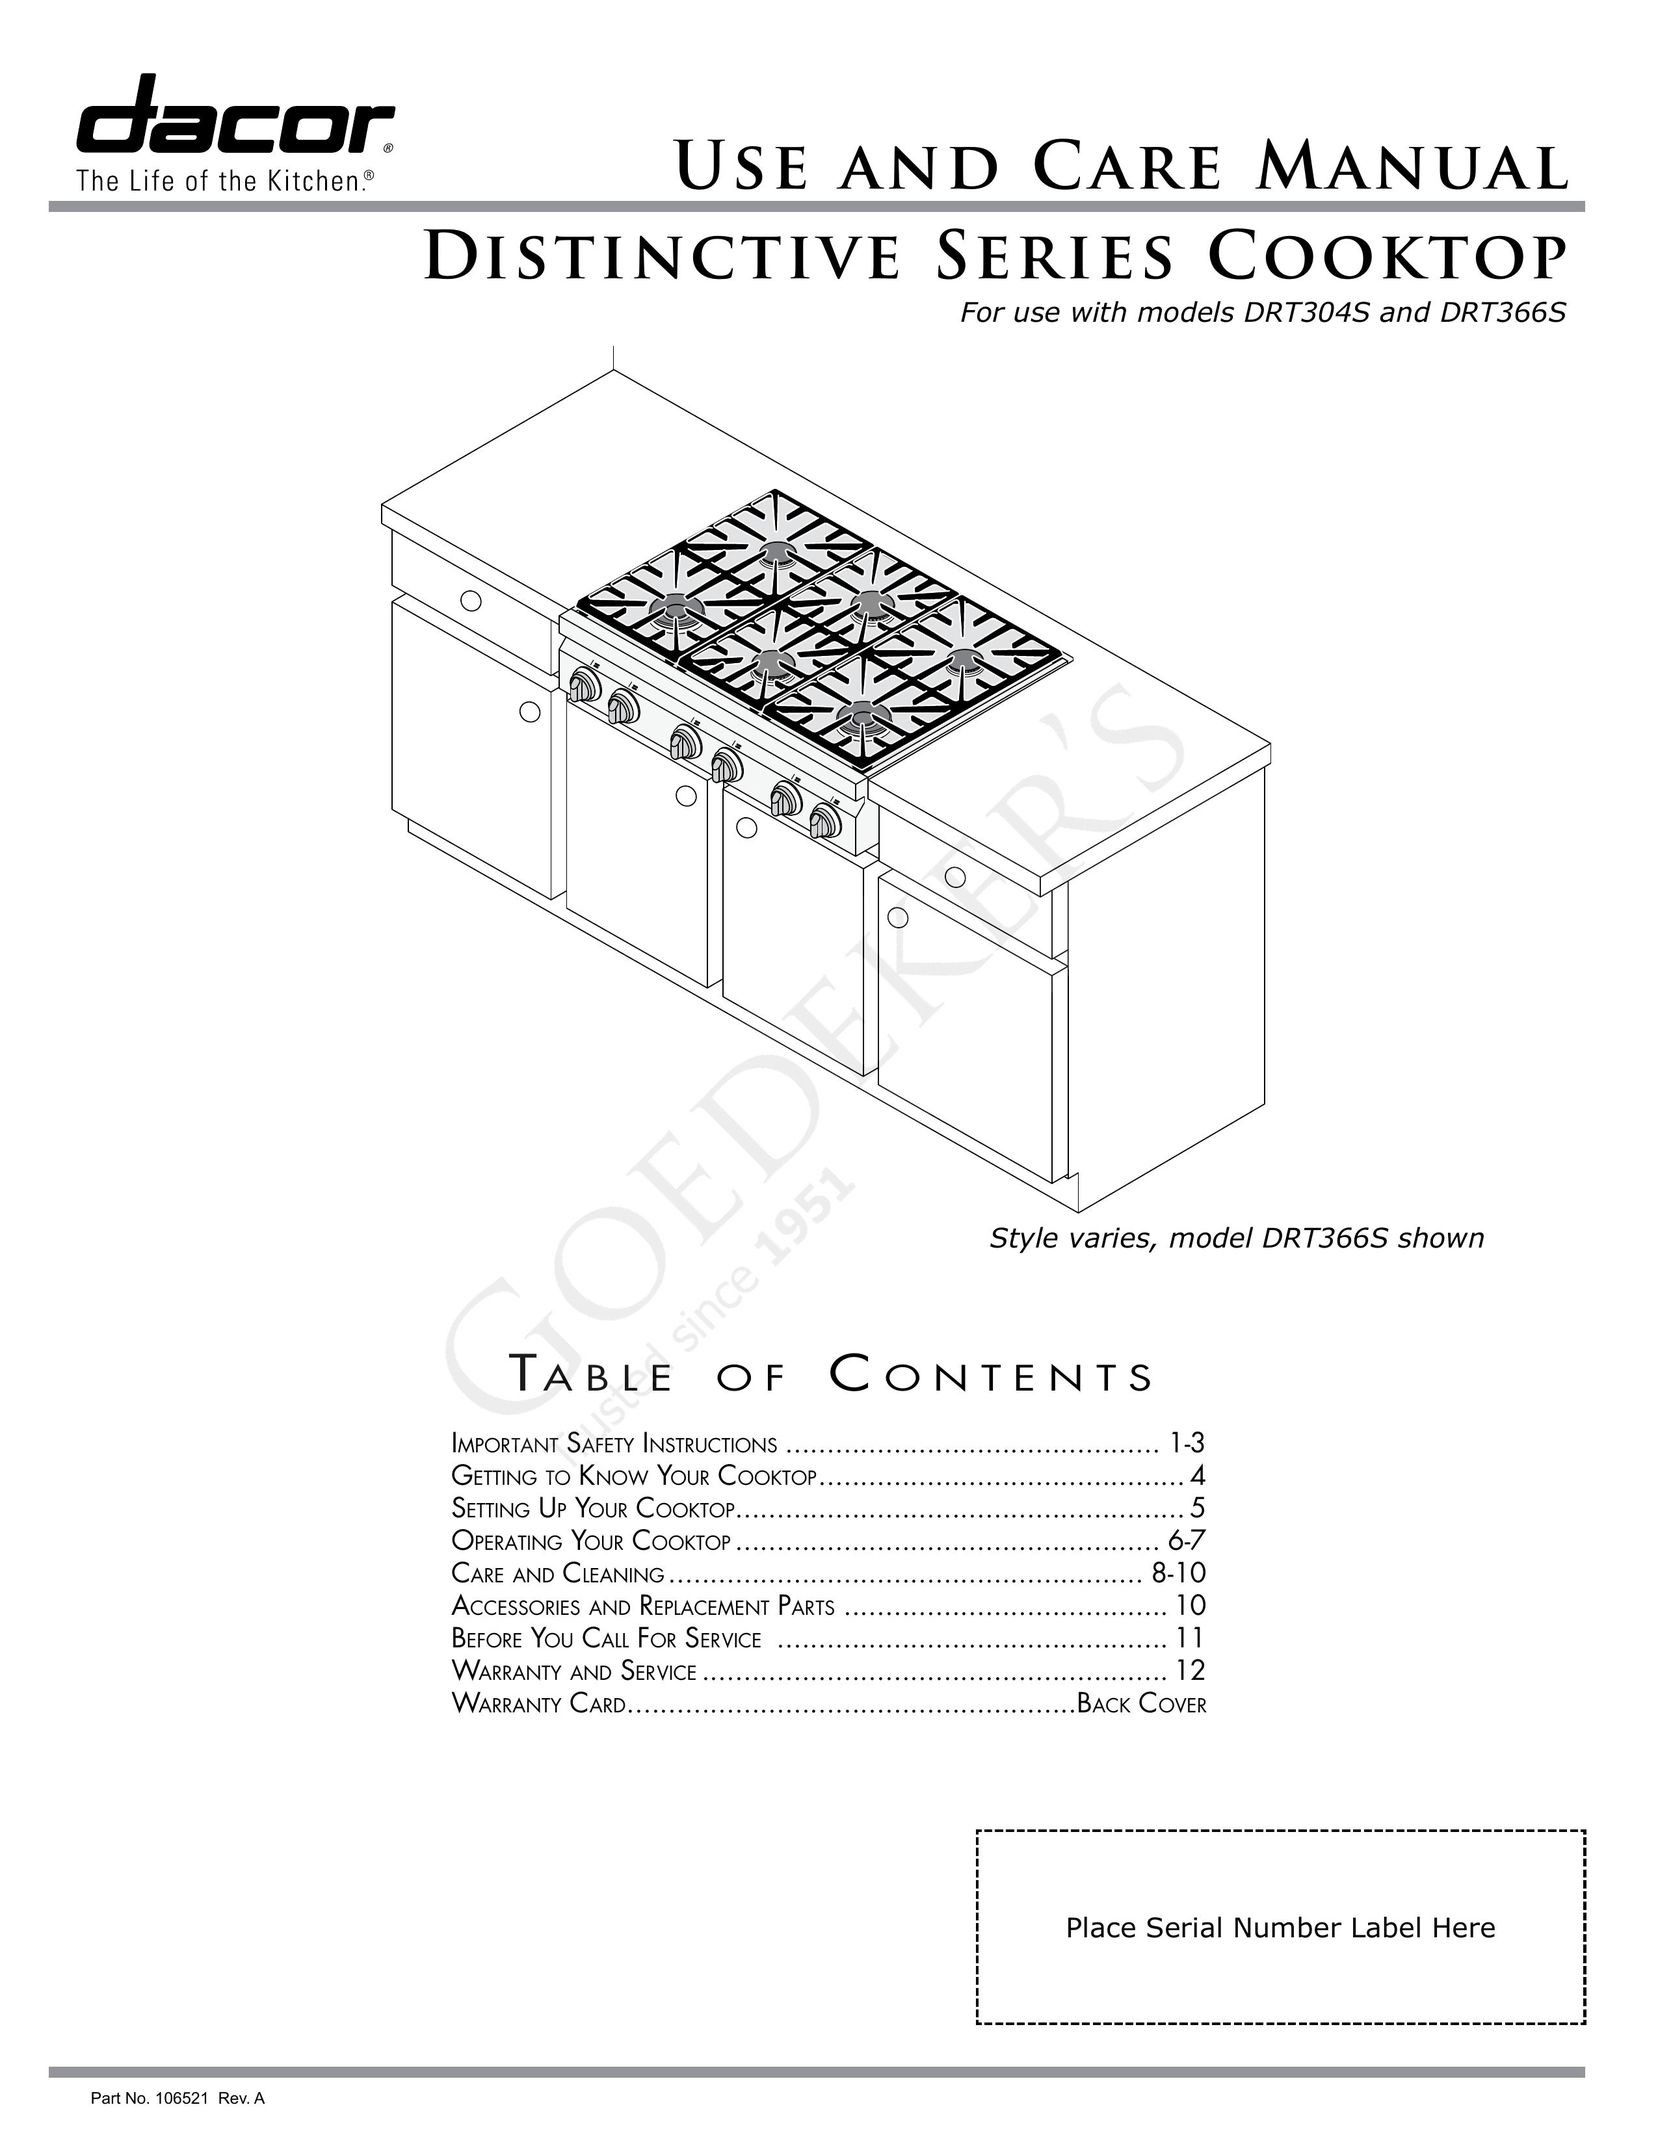 Dacor DRT366S Cooktop User Manual